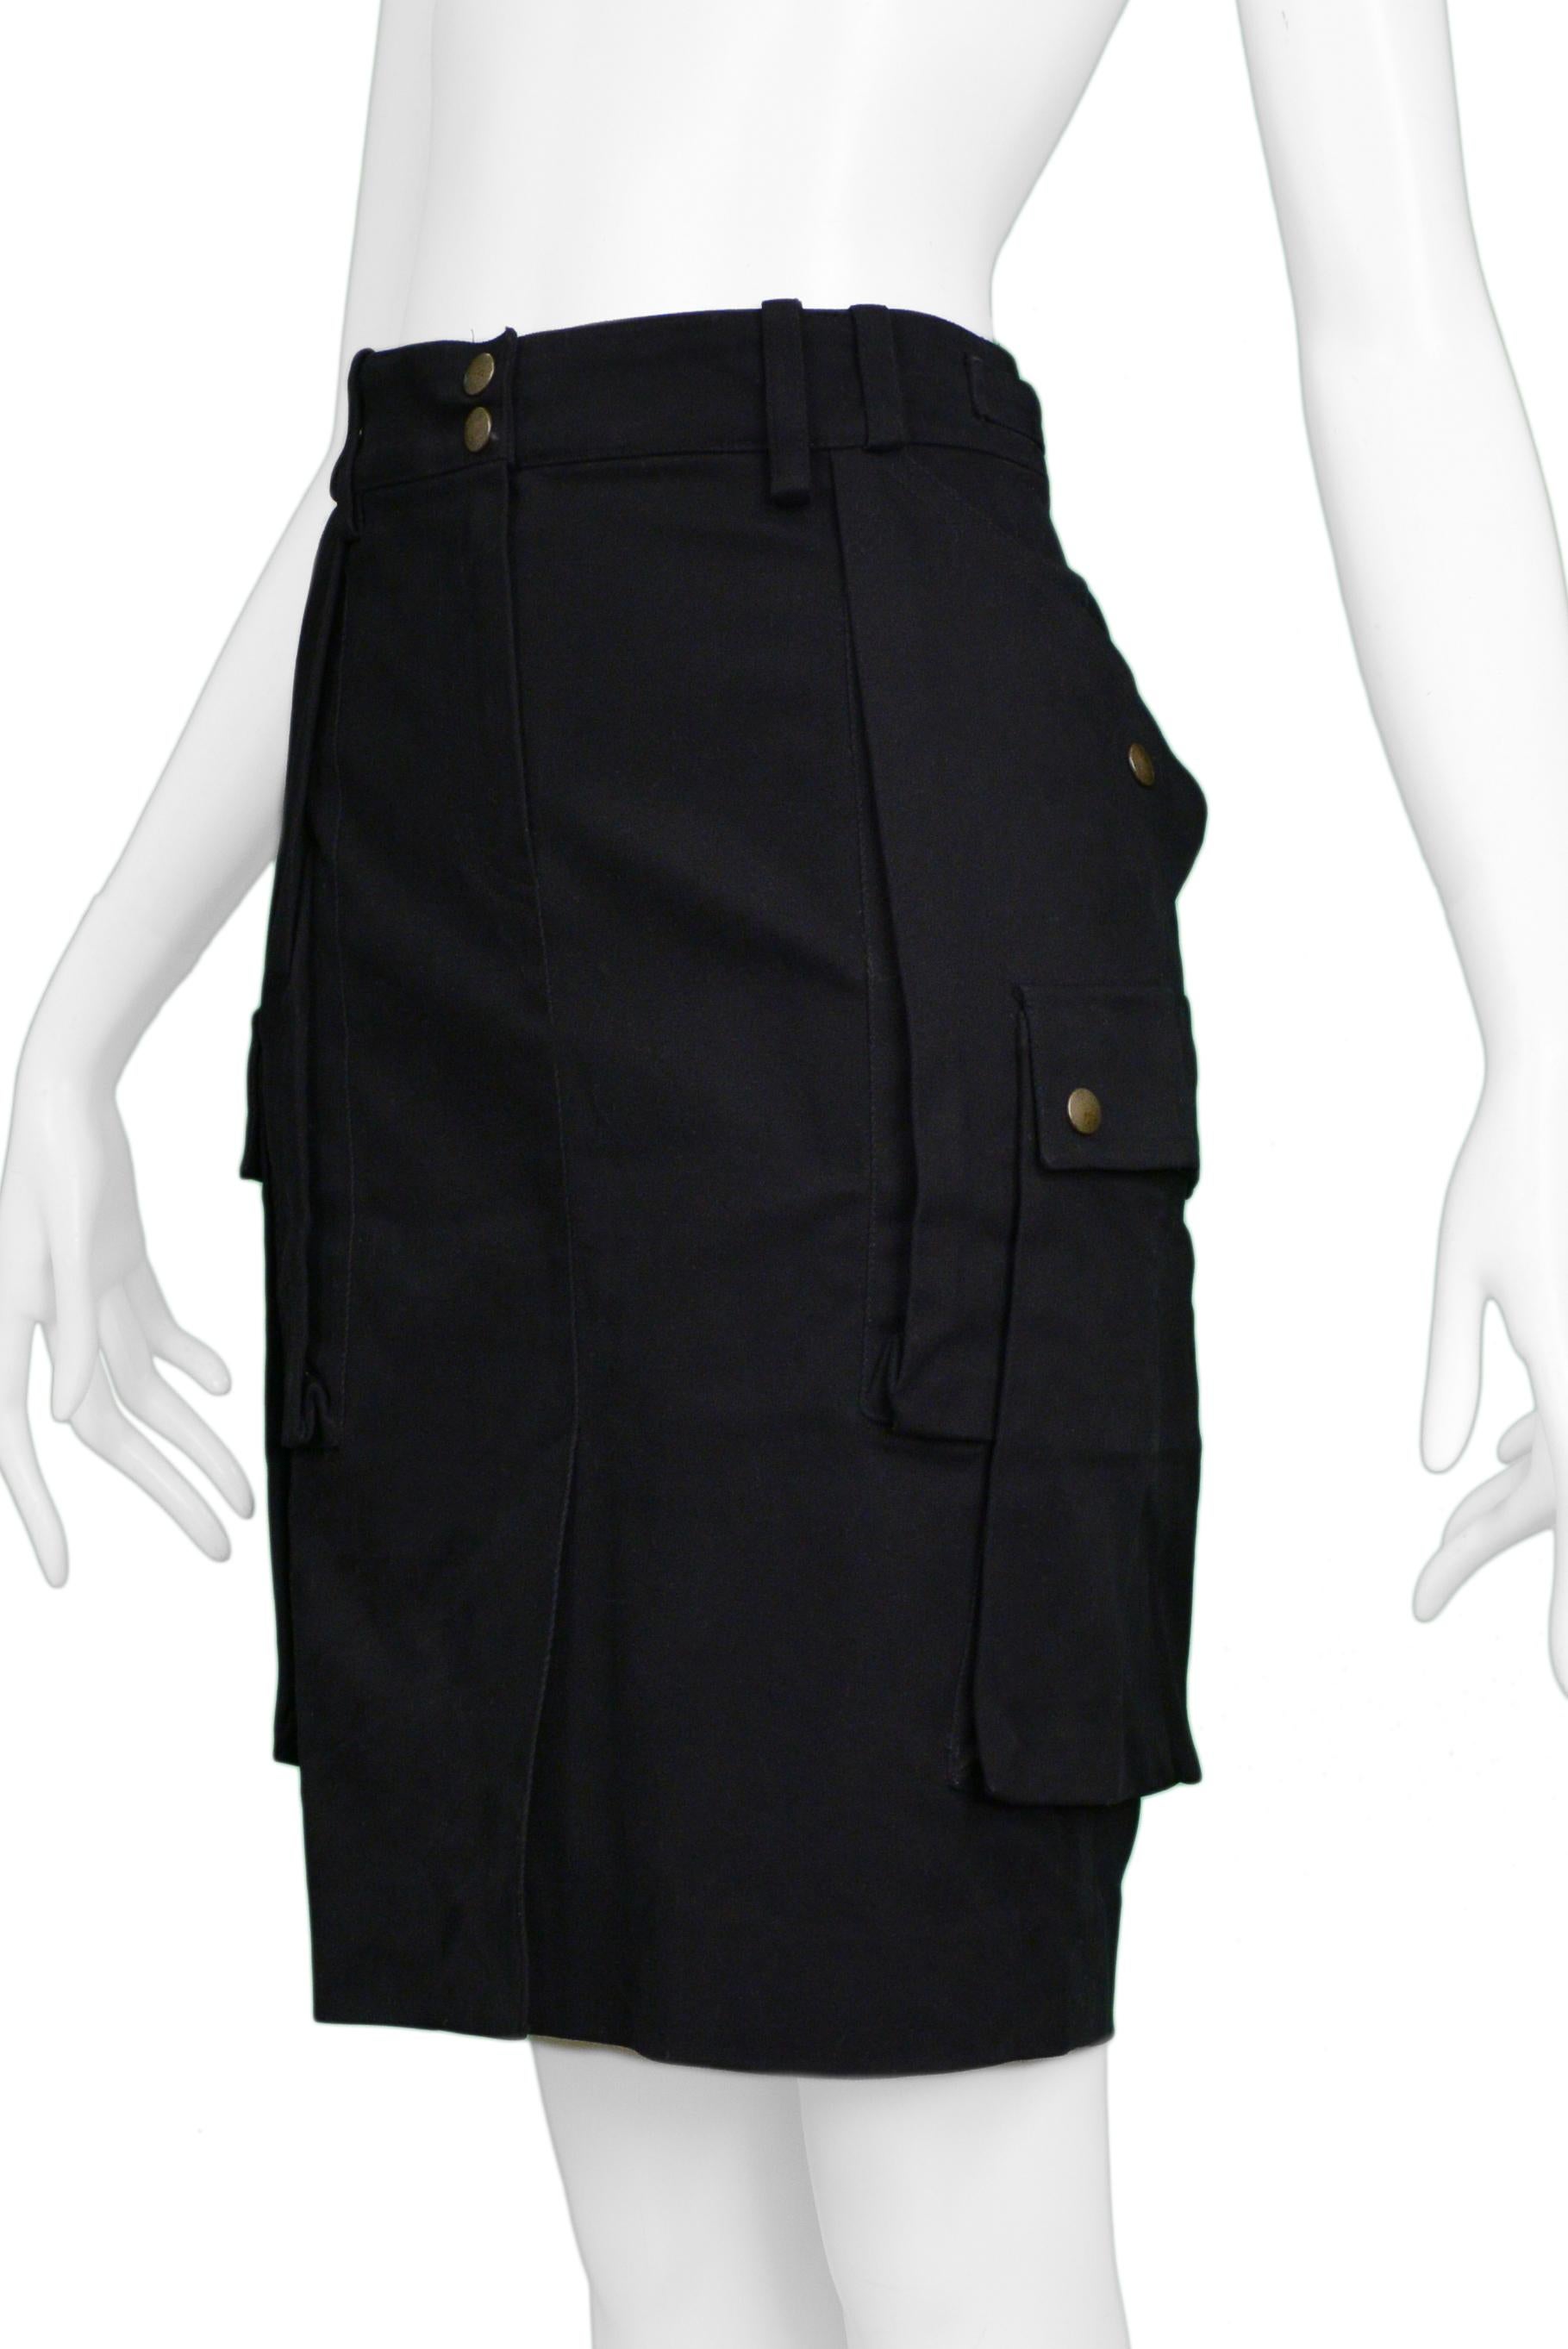 Balenciaga By Ghesquiere Black Cargo Skirt 2002 For Sale 1